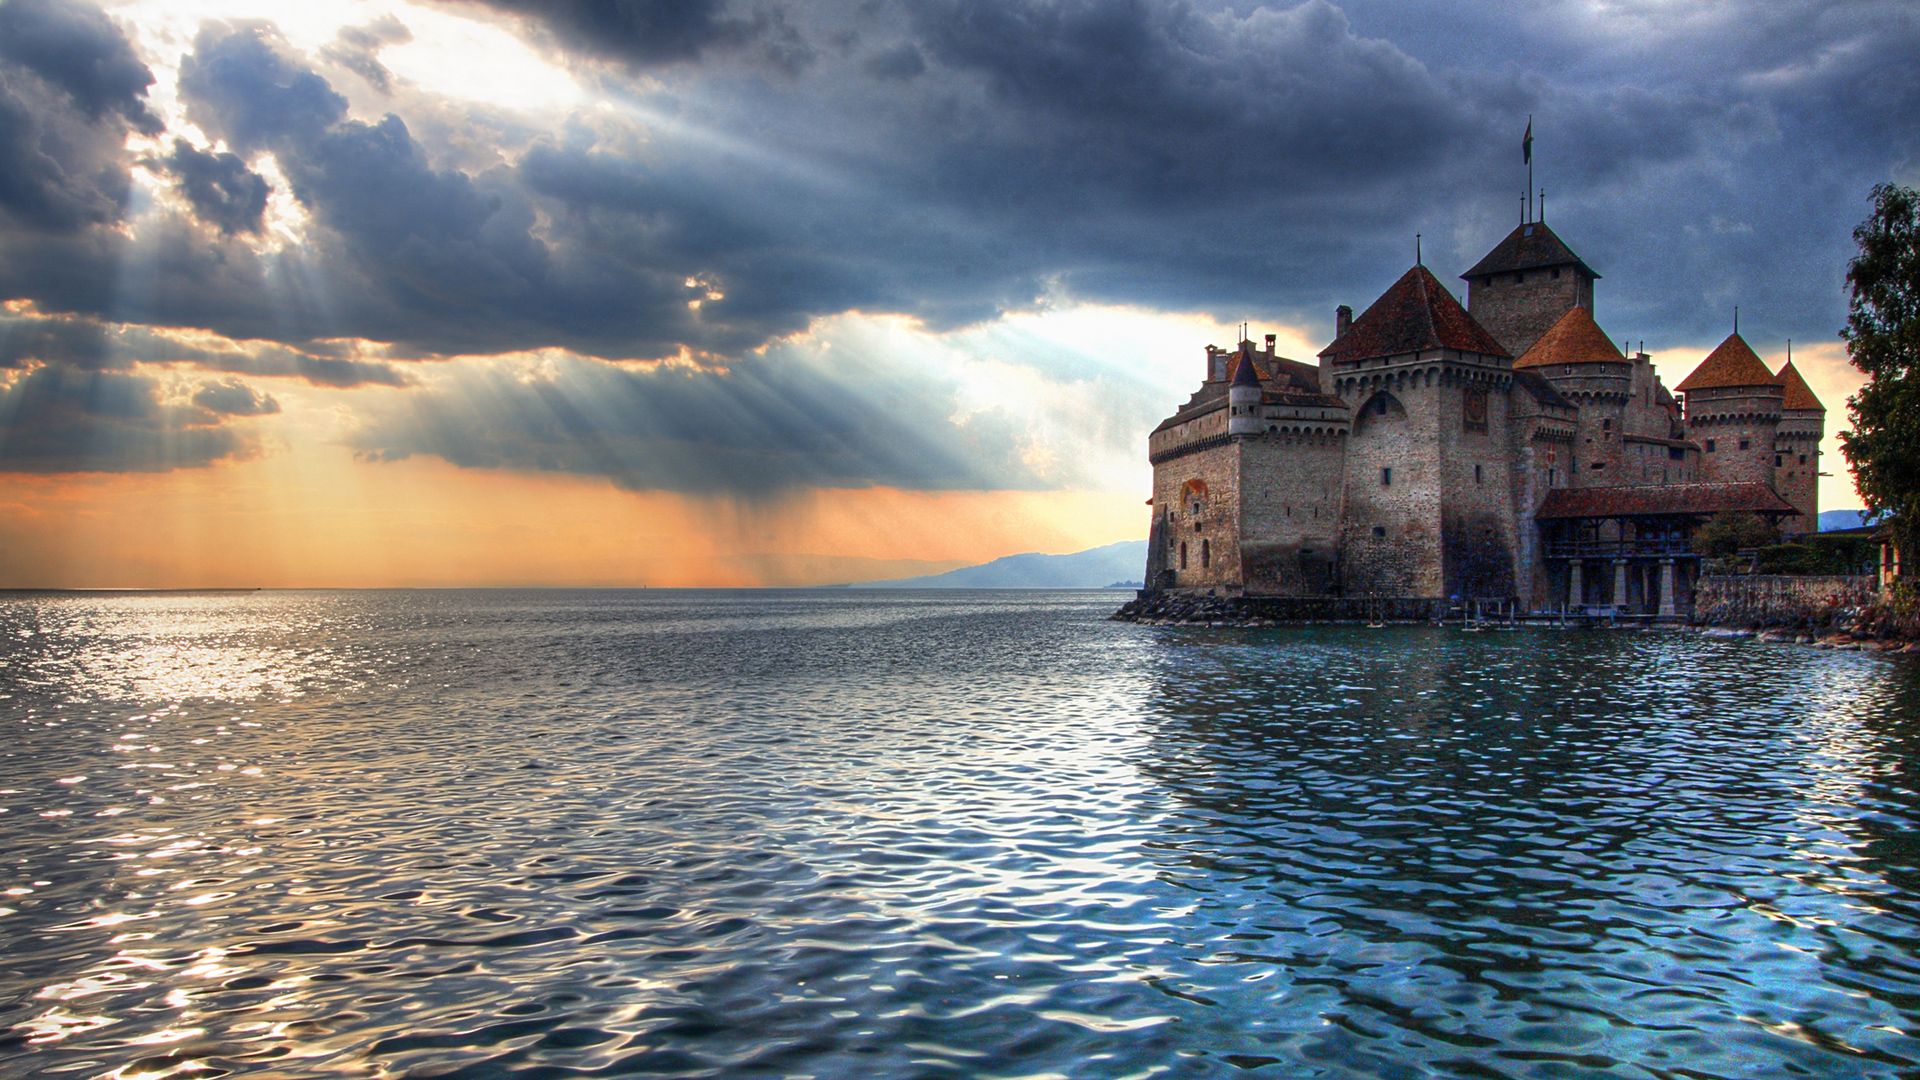 Castle on the Water Wallpapers | Castles | Pinterest | Castles